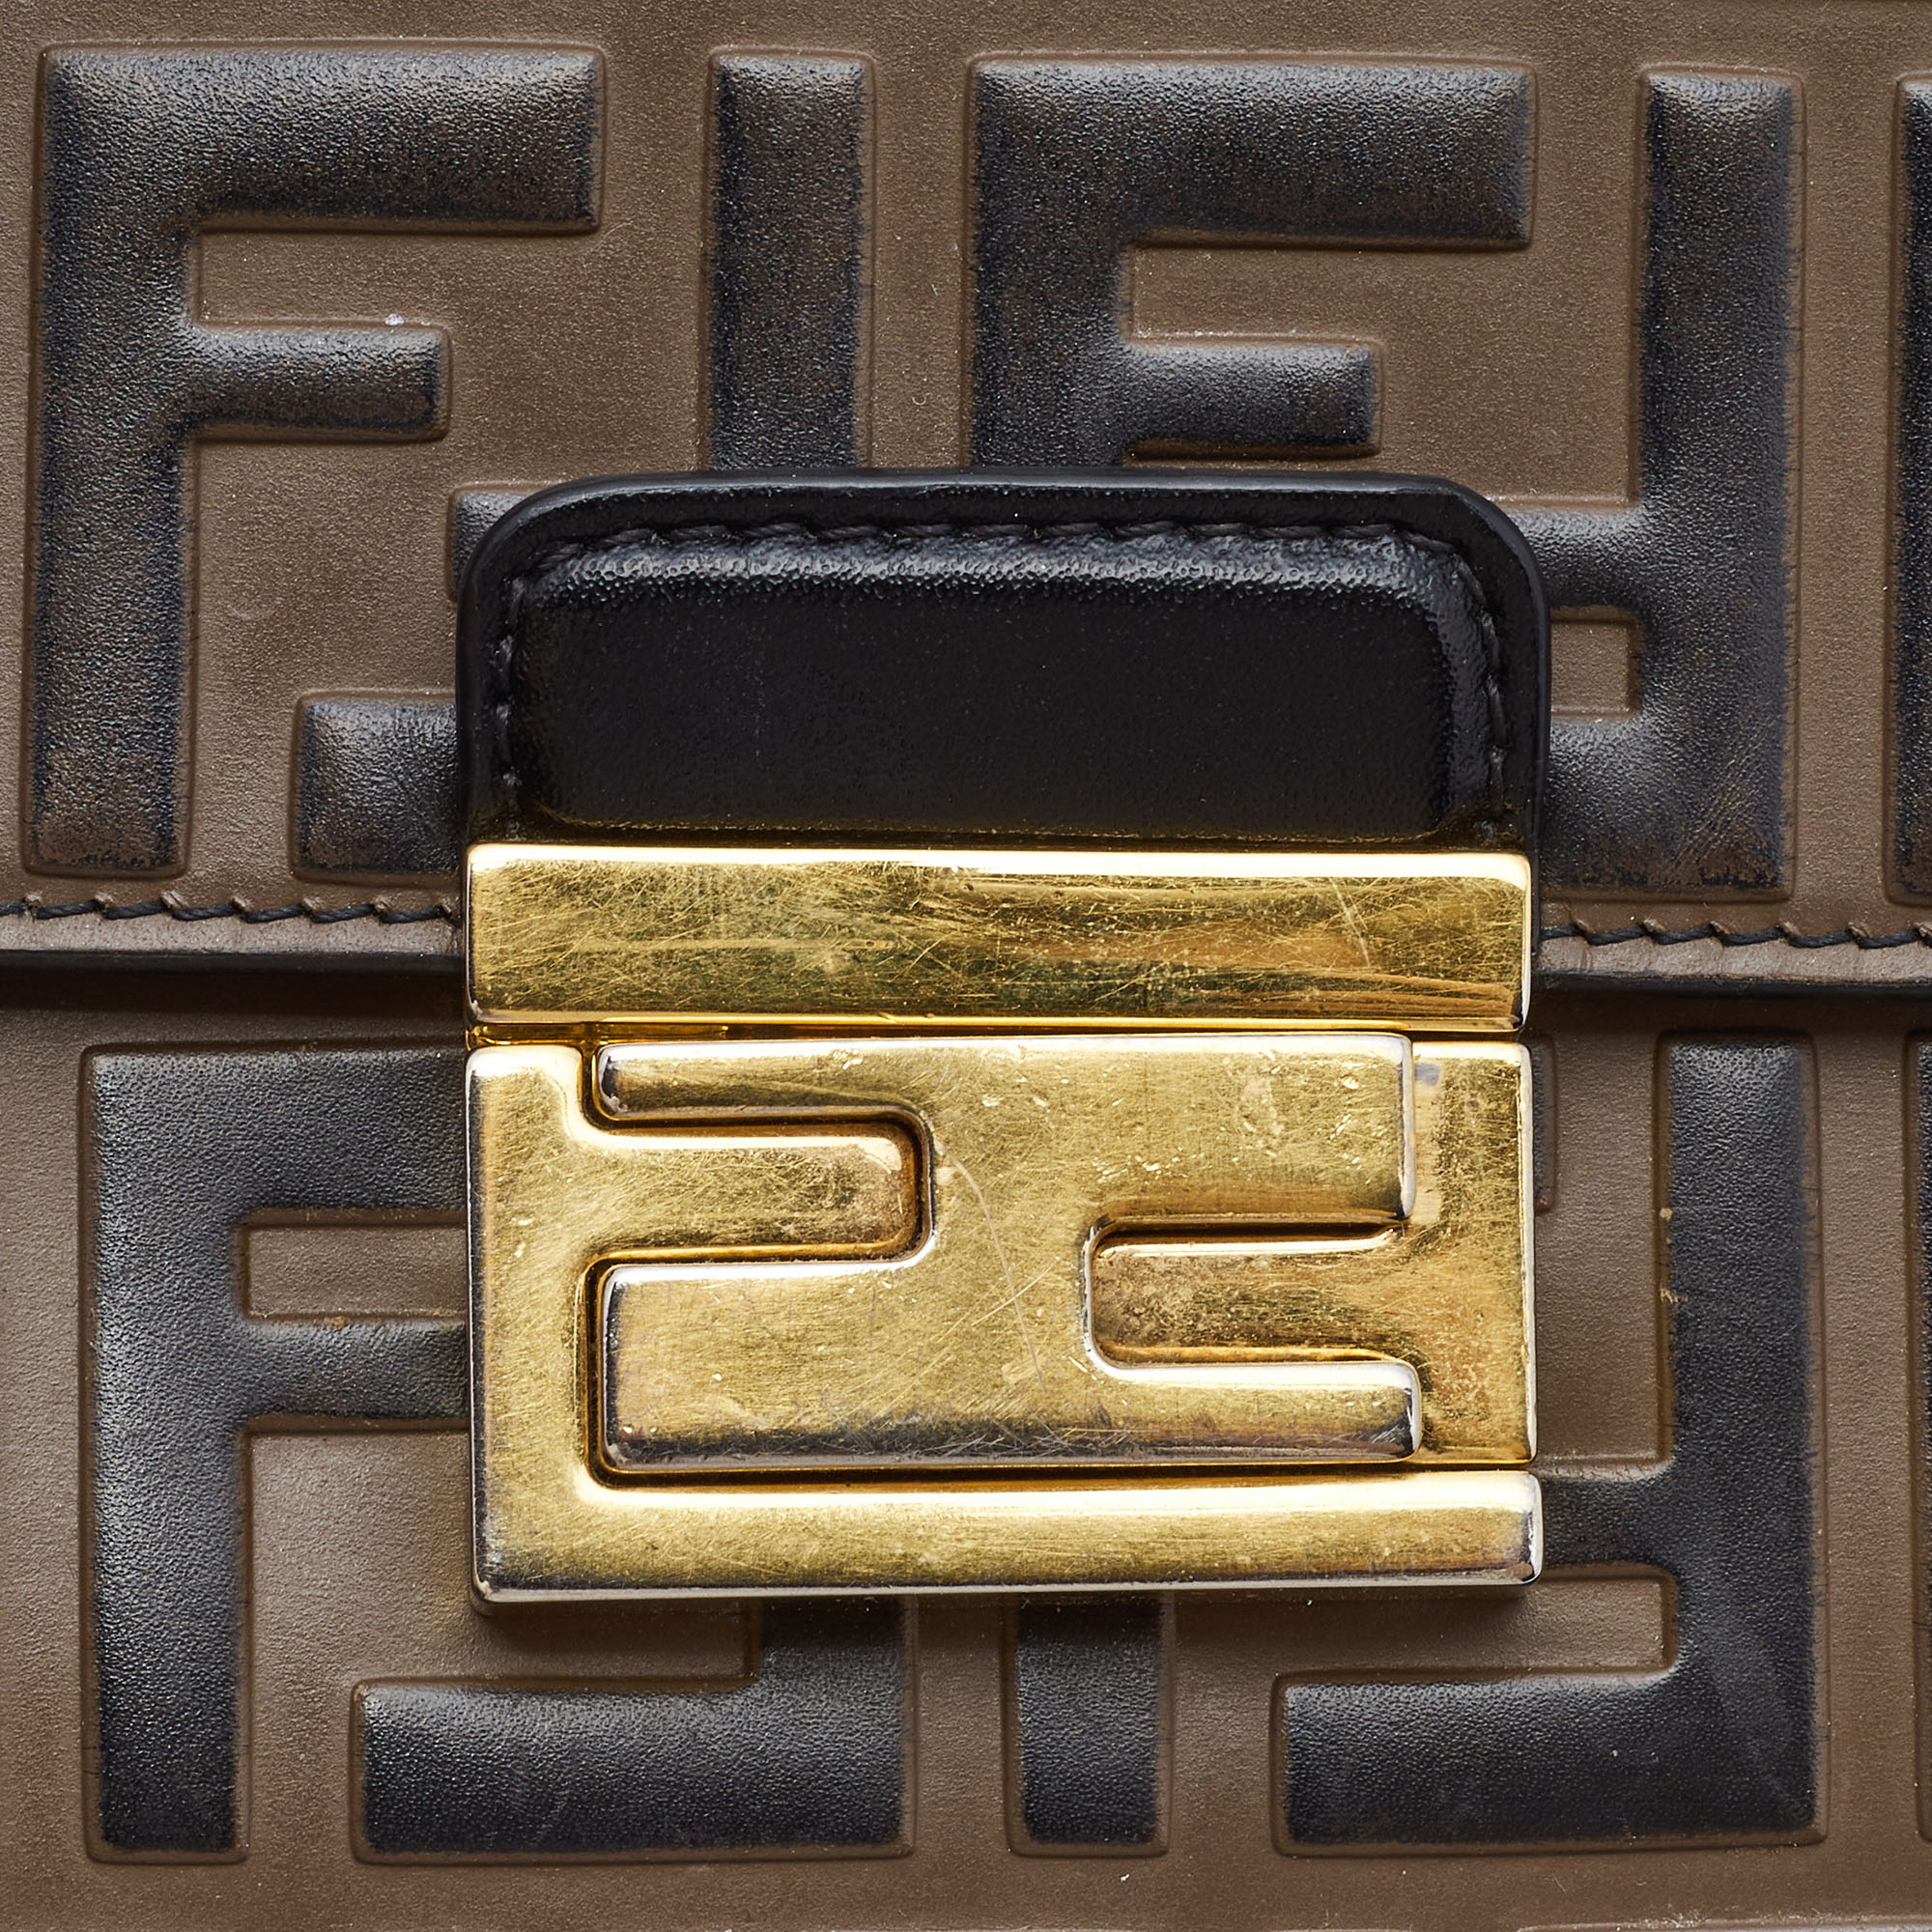 Fendi Black/Brown Zucca Embossed Leather Small Kan U Shoulder Bag